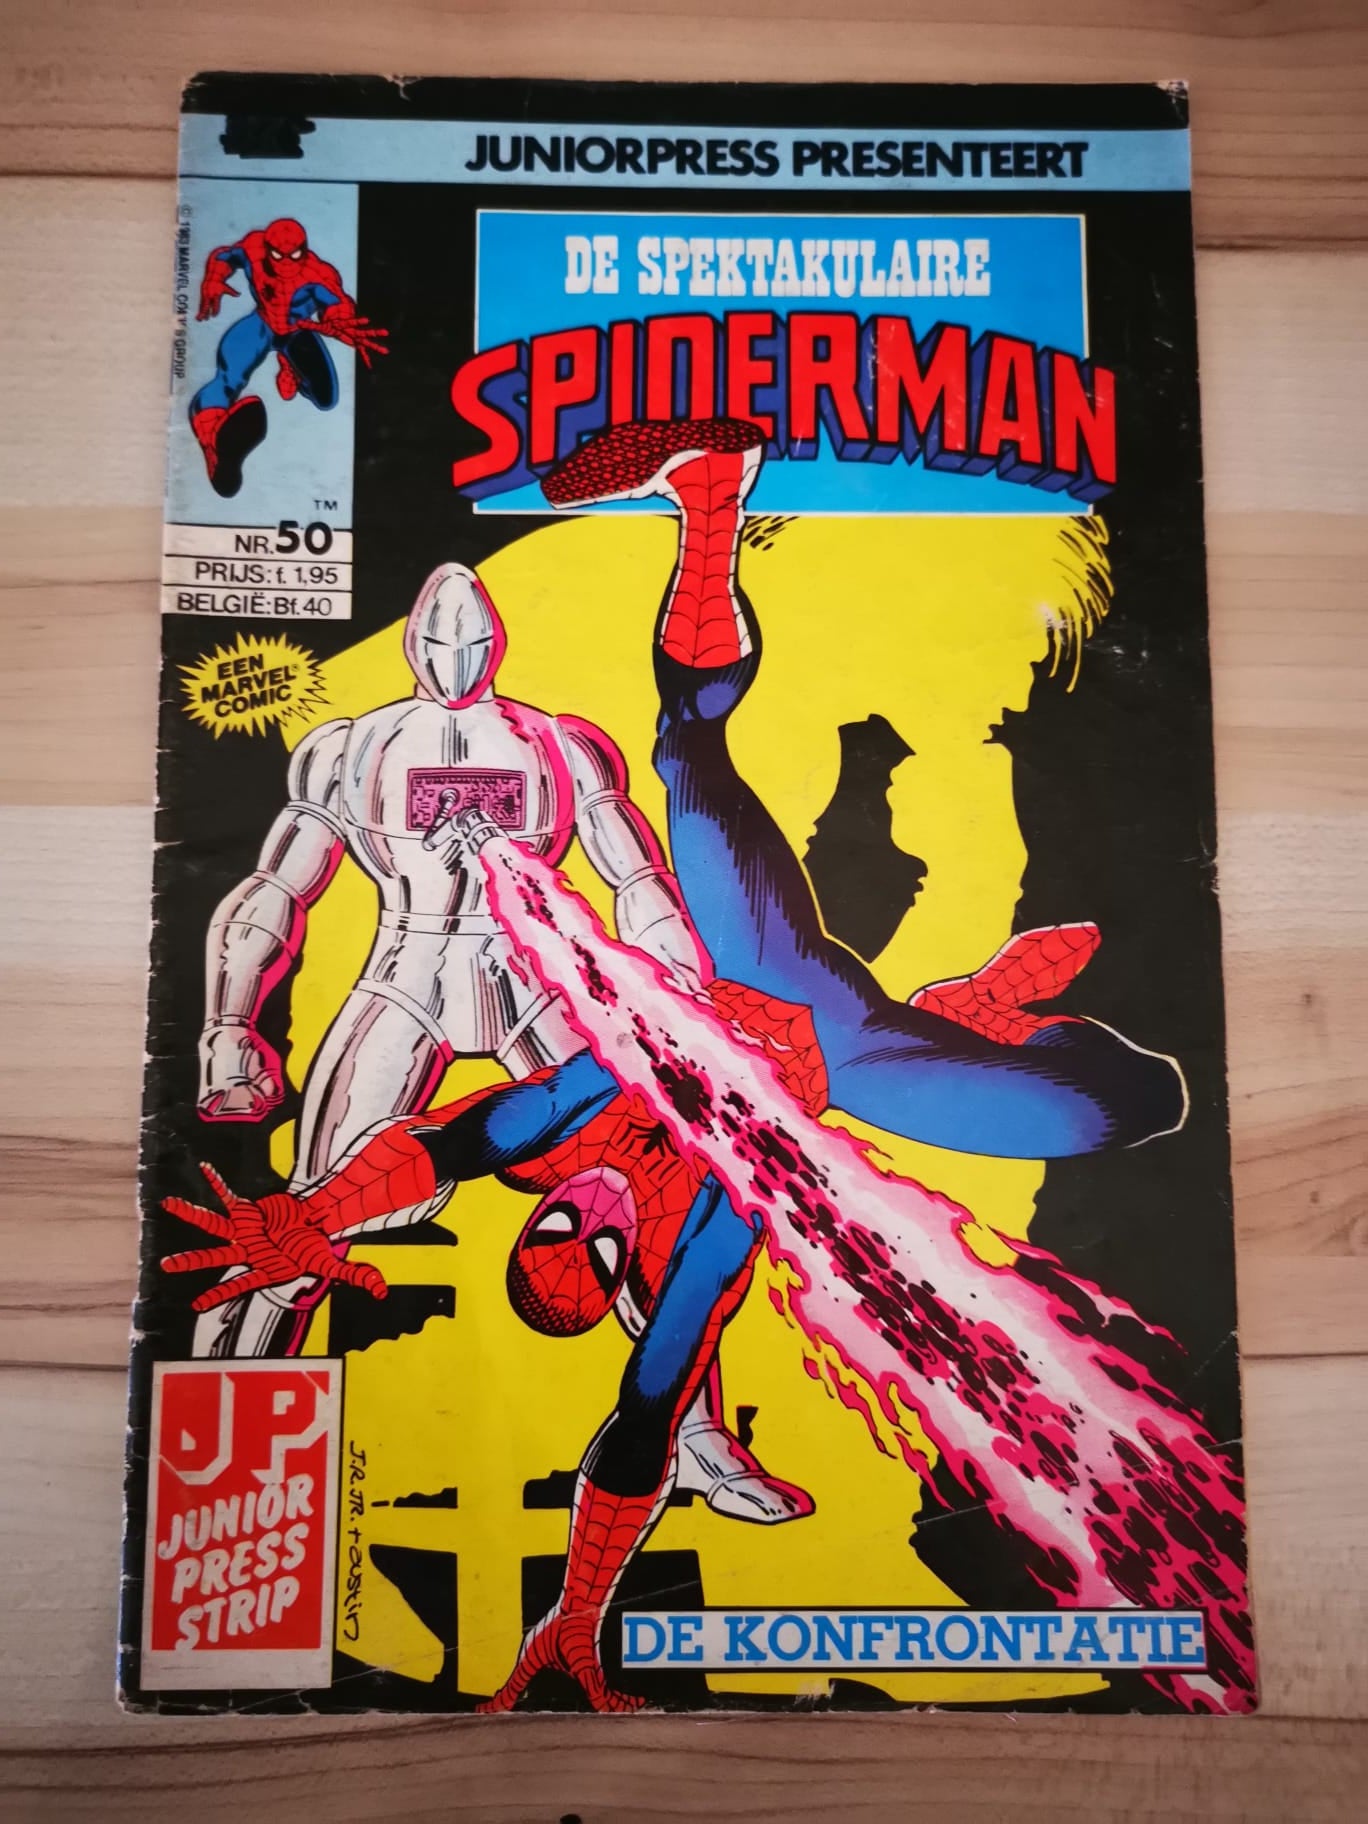 De spektakulaire spiderman #50